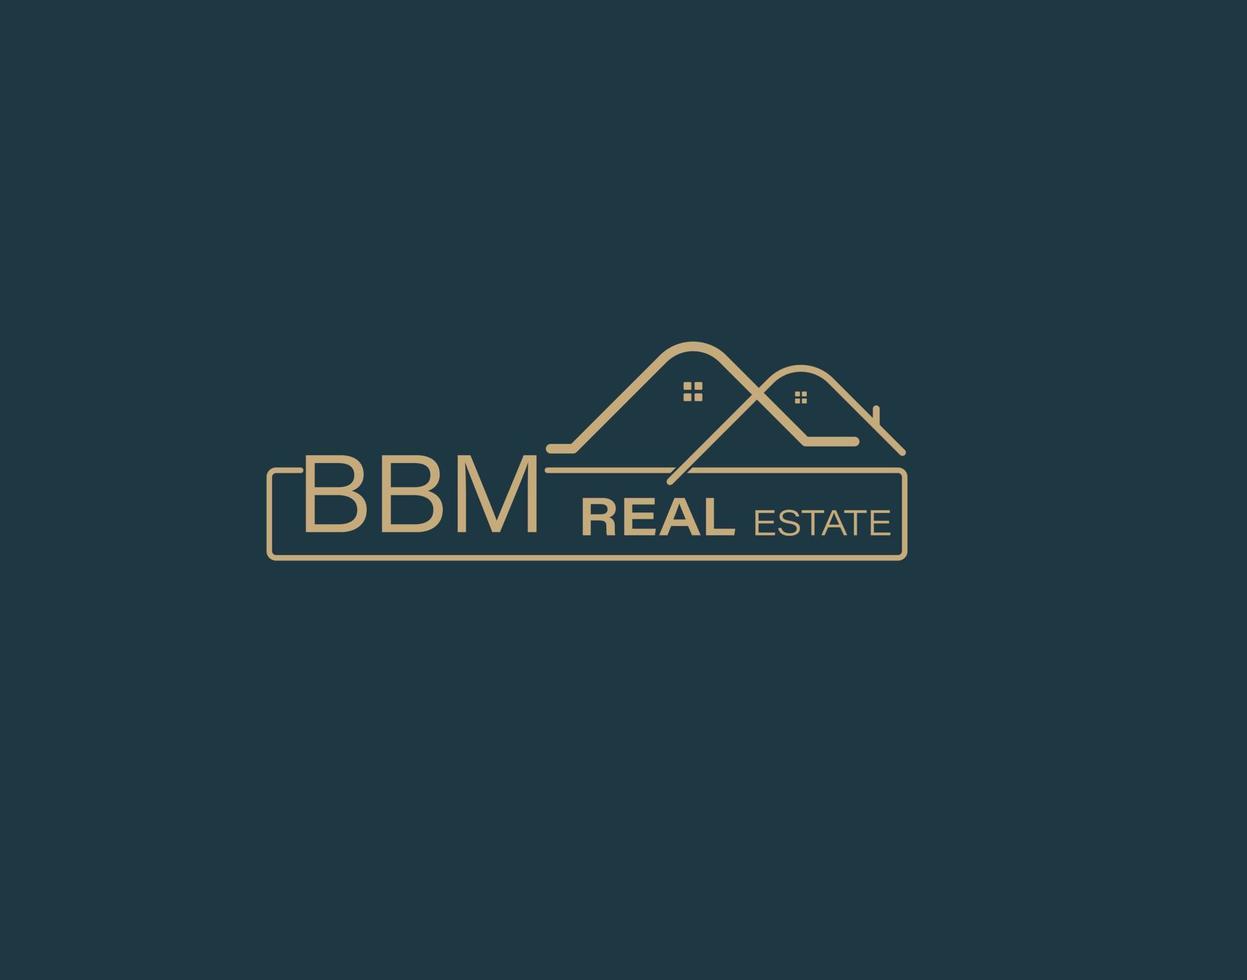 BBM Real Estate and Consultants Logo Design Vectors images. Luxury Real Estate Logo Design